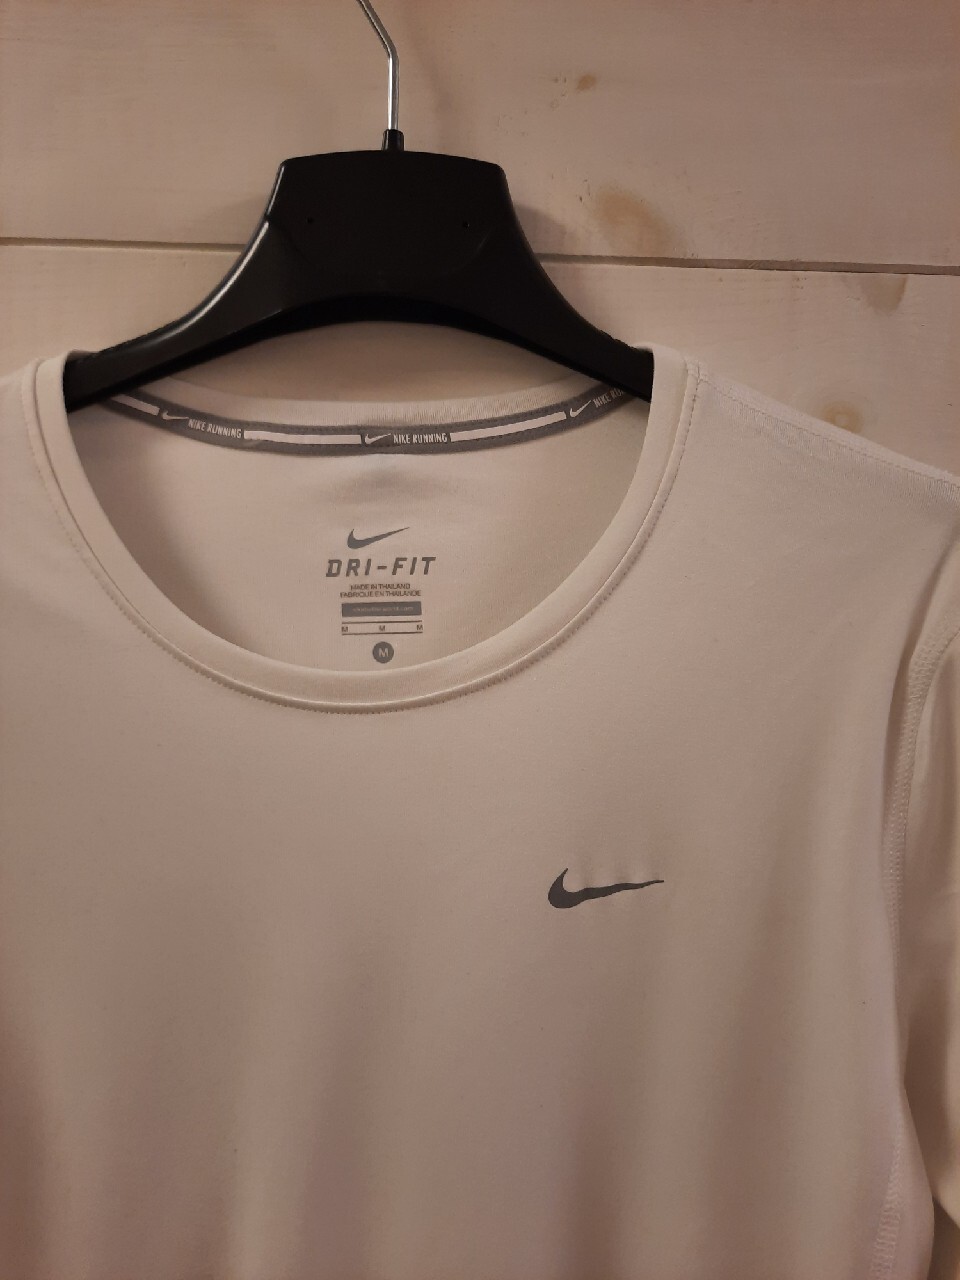 Zdjęcie oferty: Koszulka damska, bluzka Nike Running. M